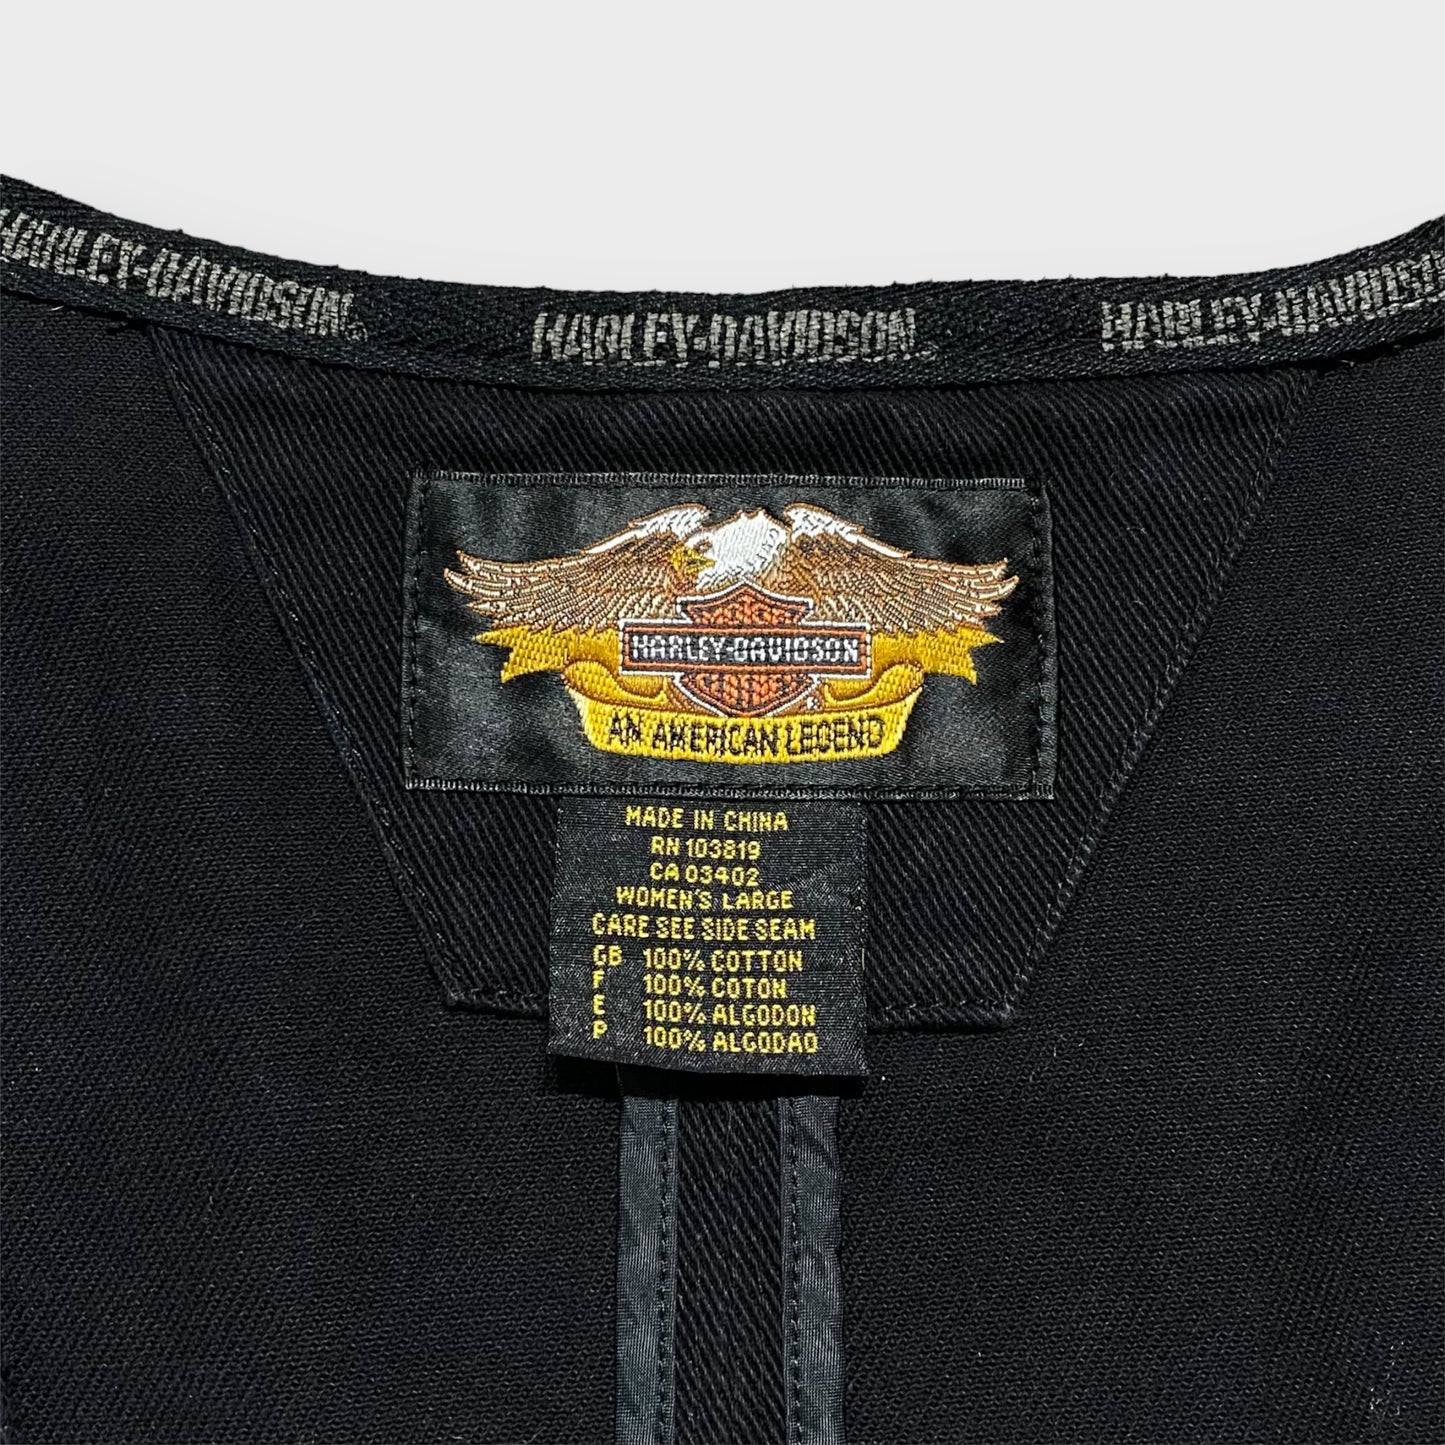 00's "Harley-Davidson" Lace up cotton vest